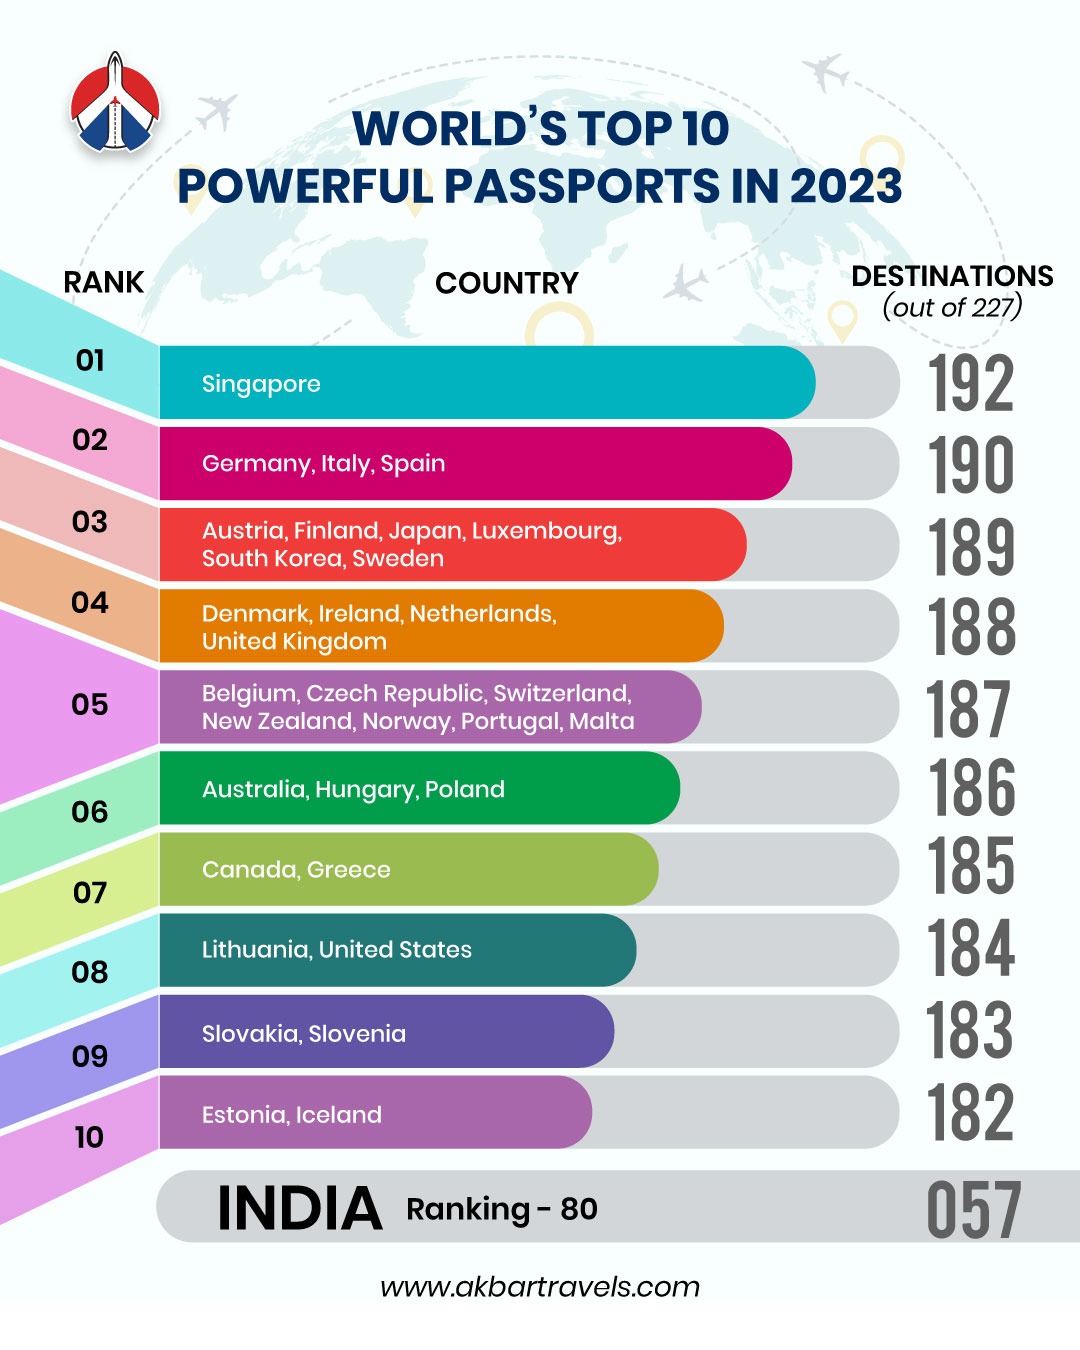 Henley Passport Index 2023 New Indian Passport Ranking Revealed